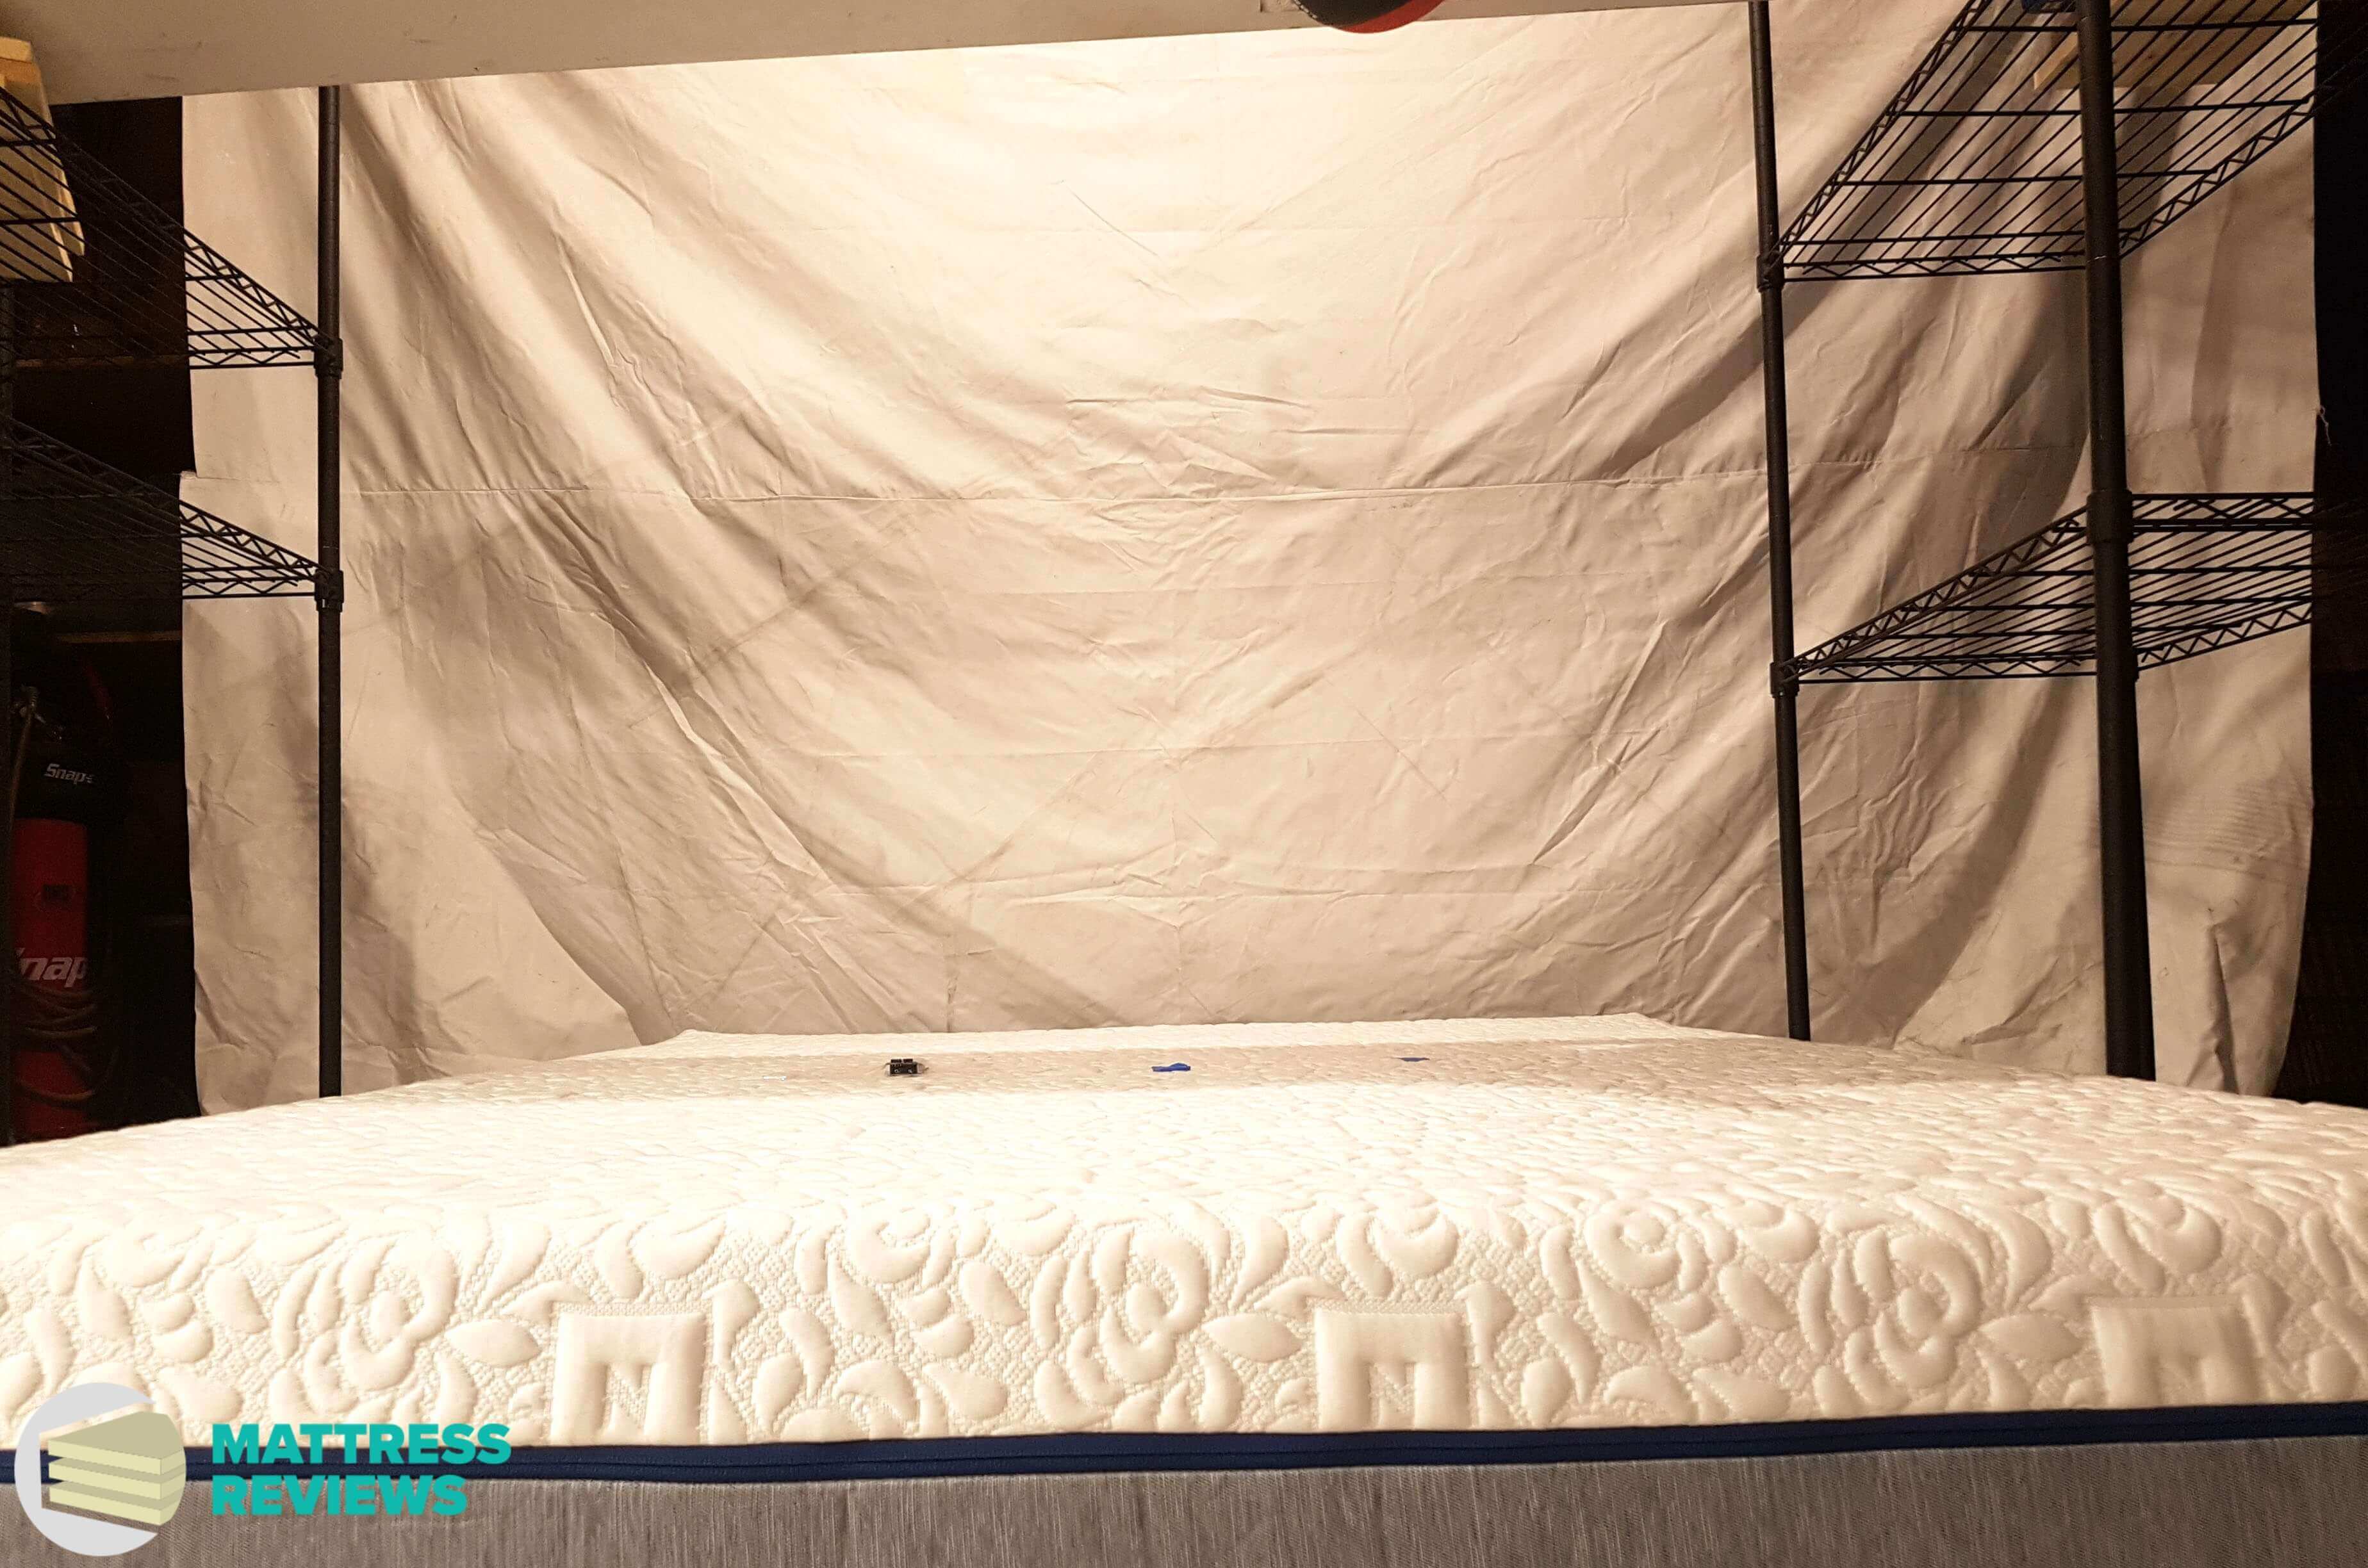 Image of the Novosbed (Medium) mattress motion isolation test.